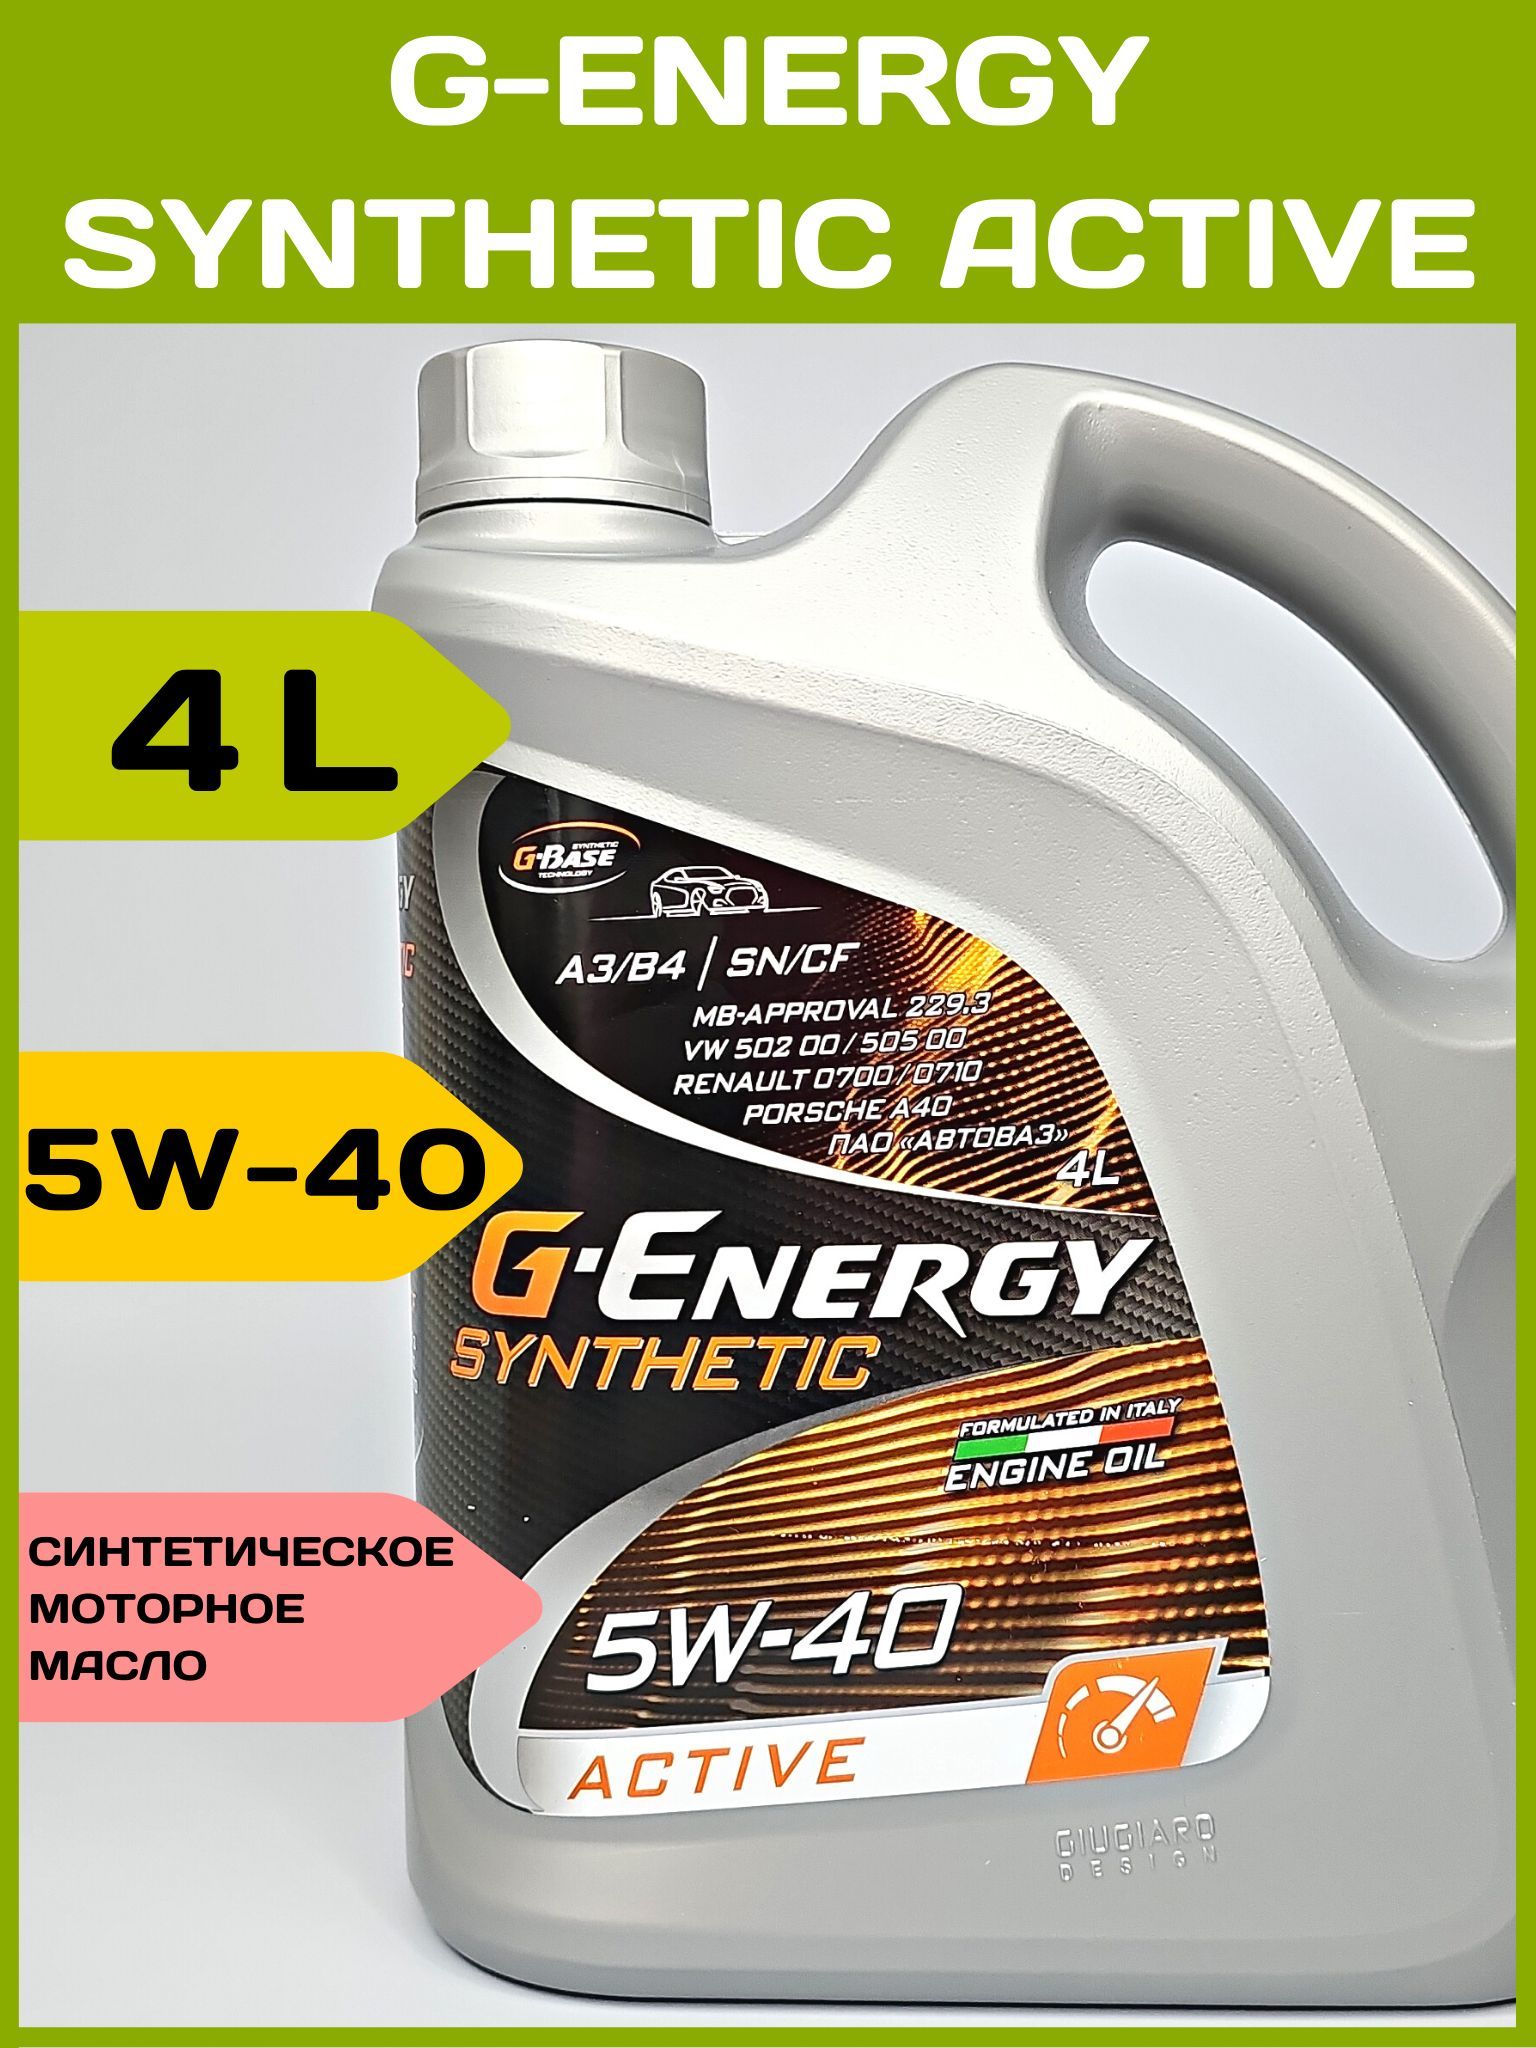 G Energy 5w40 Актив. G-Energy Synthetic Active 5w-40. Масло g Energy 5w40 синтетика. G-Energy Synthetic Active 5w-30.